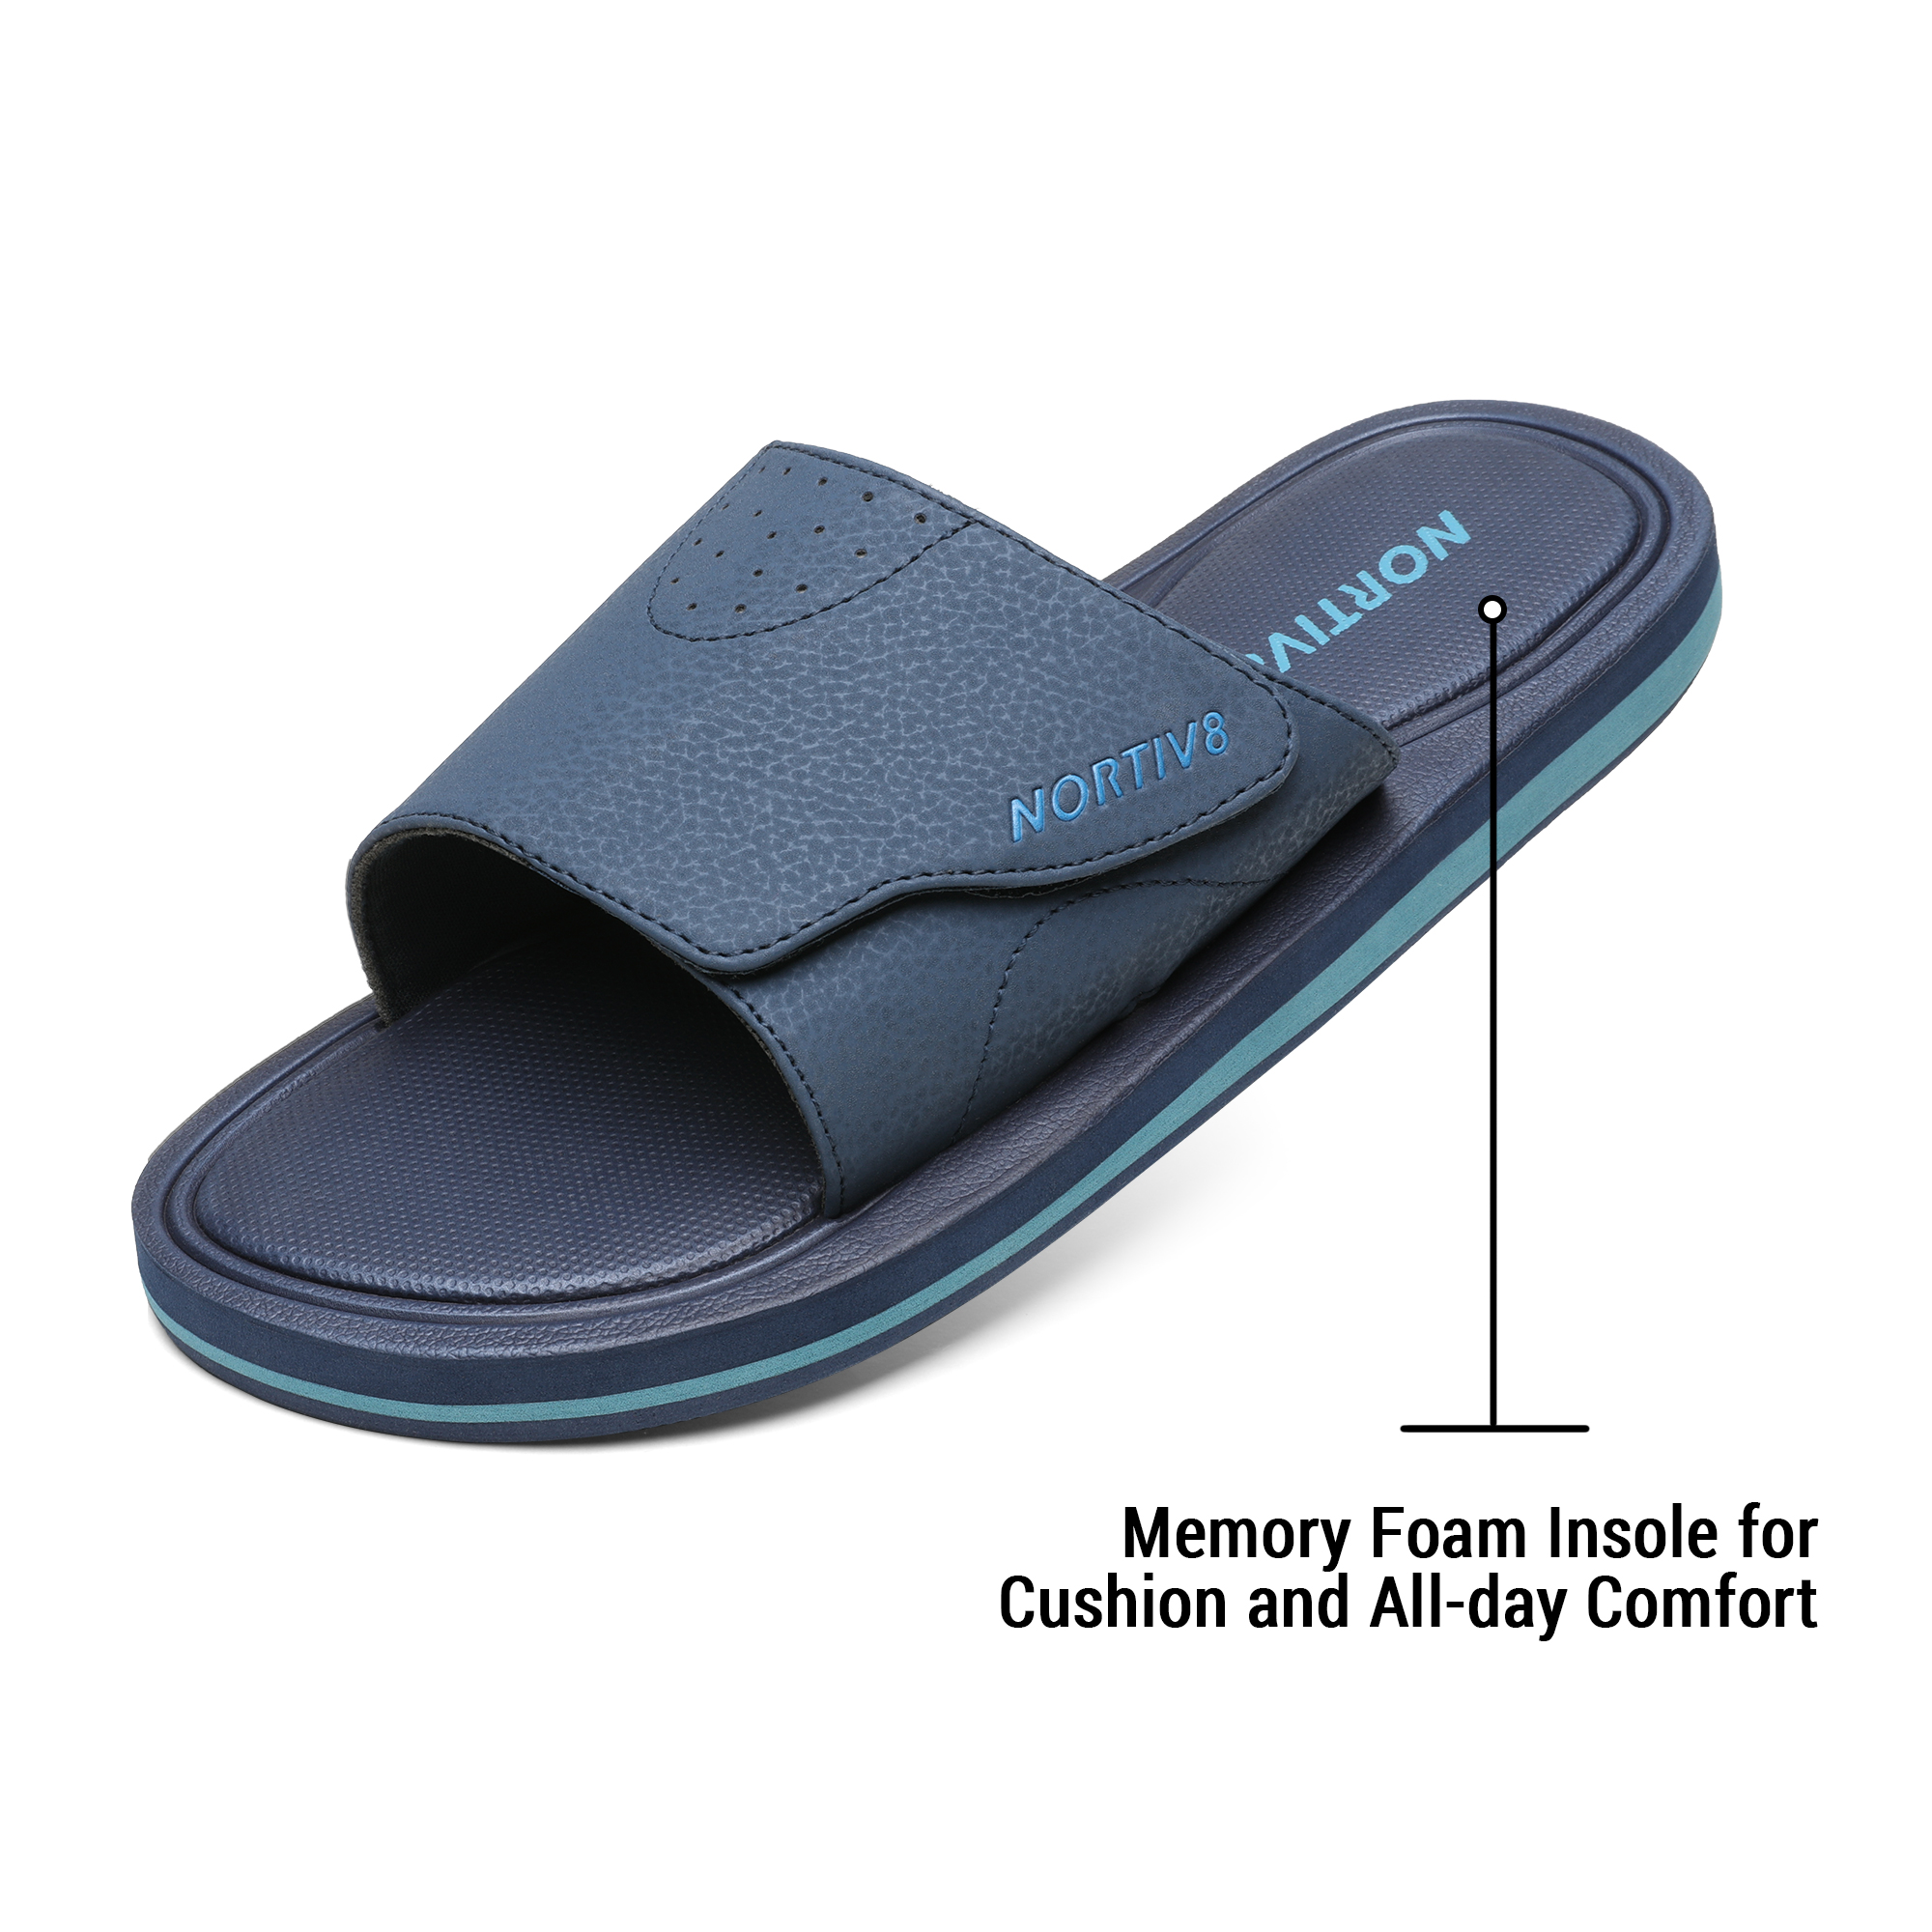 Nortiv8 Men's Memory Foam Adjustable Slide Sandals Comfort Lightweight Summer Beach Sandals Shoes FUSION NAVY Size 13 - image 2 of 5